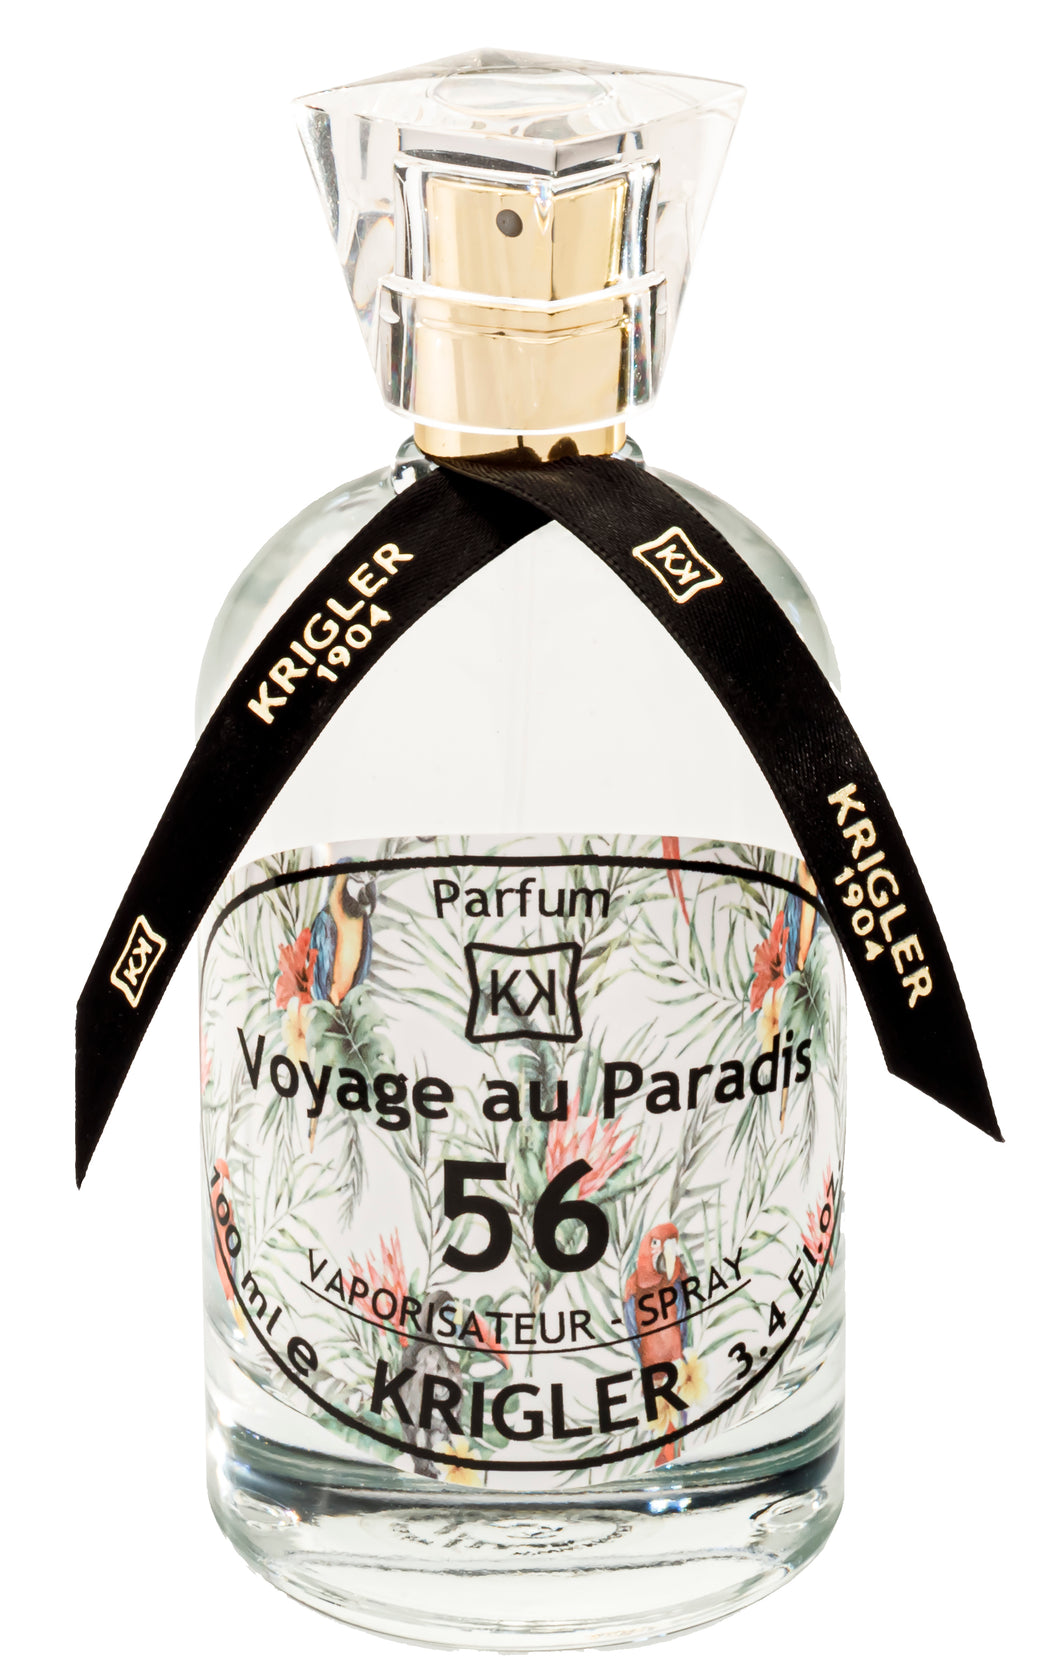 Voyage au Paradis 56 Parfum